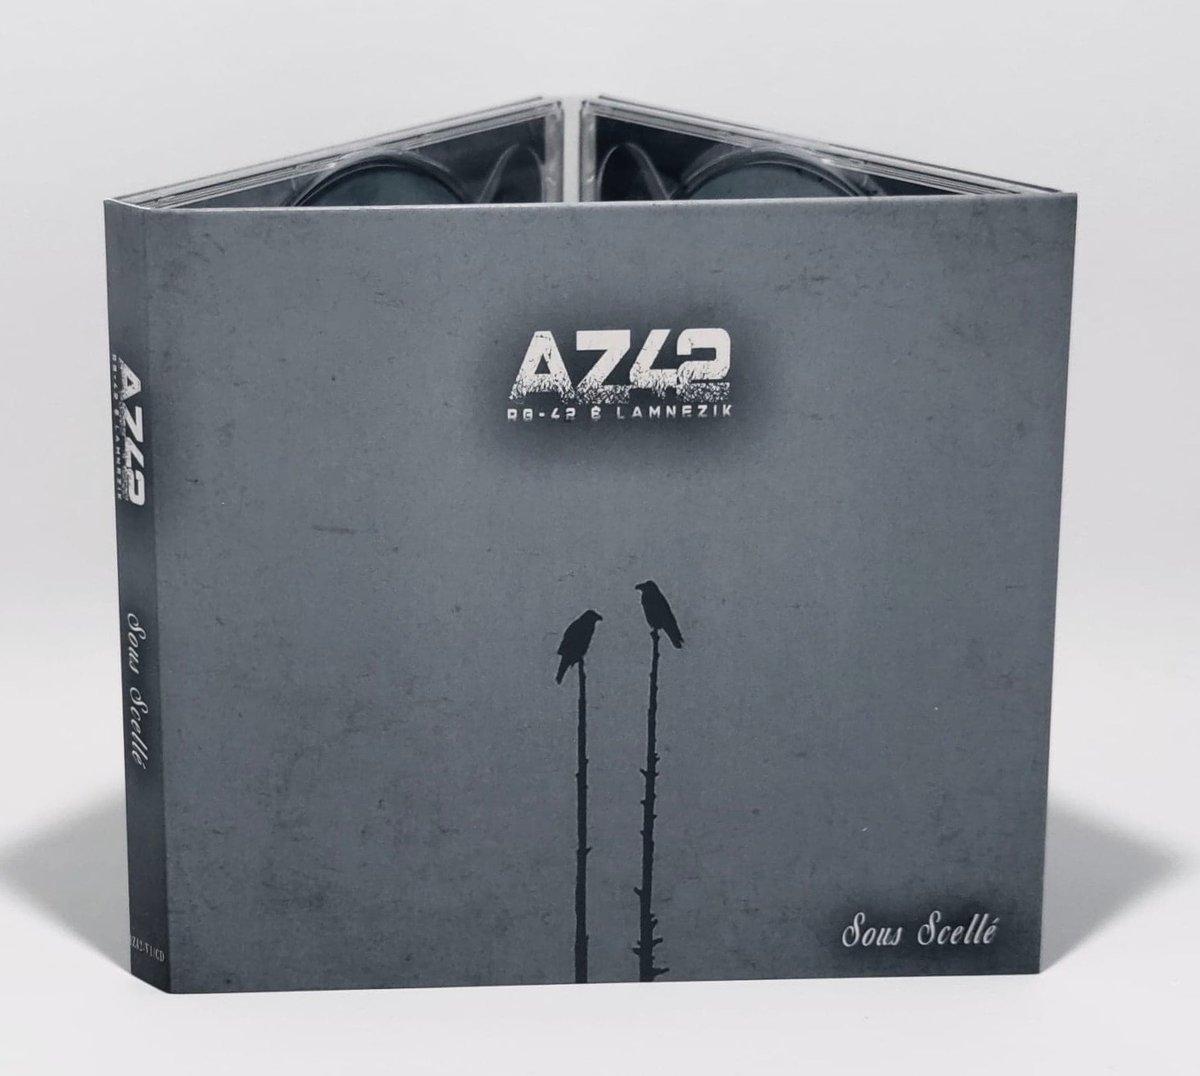 AZ42 - Sous Scellé - Edition Deluxe Digipack 2 CD